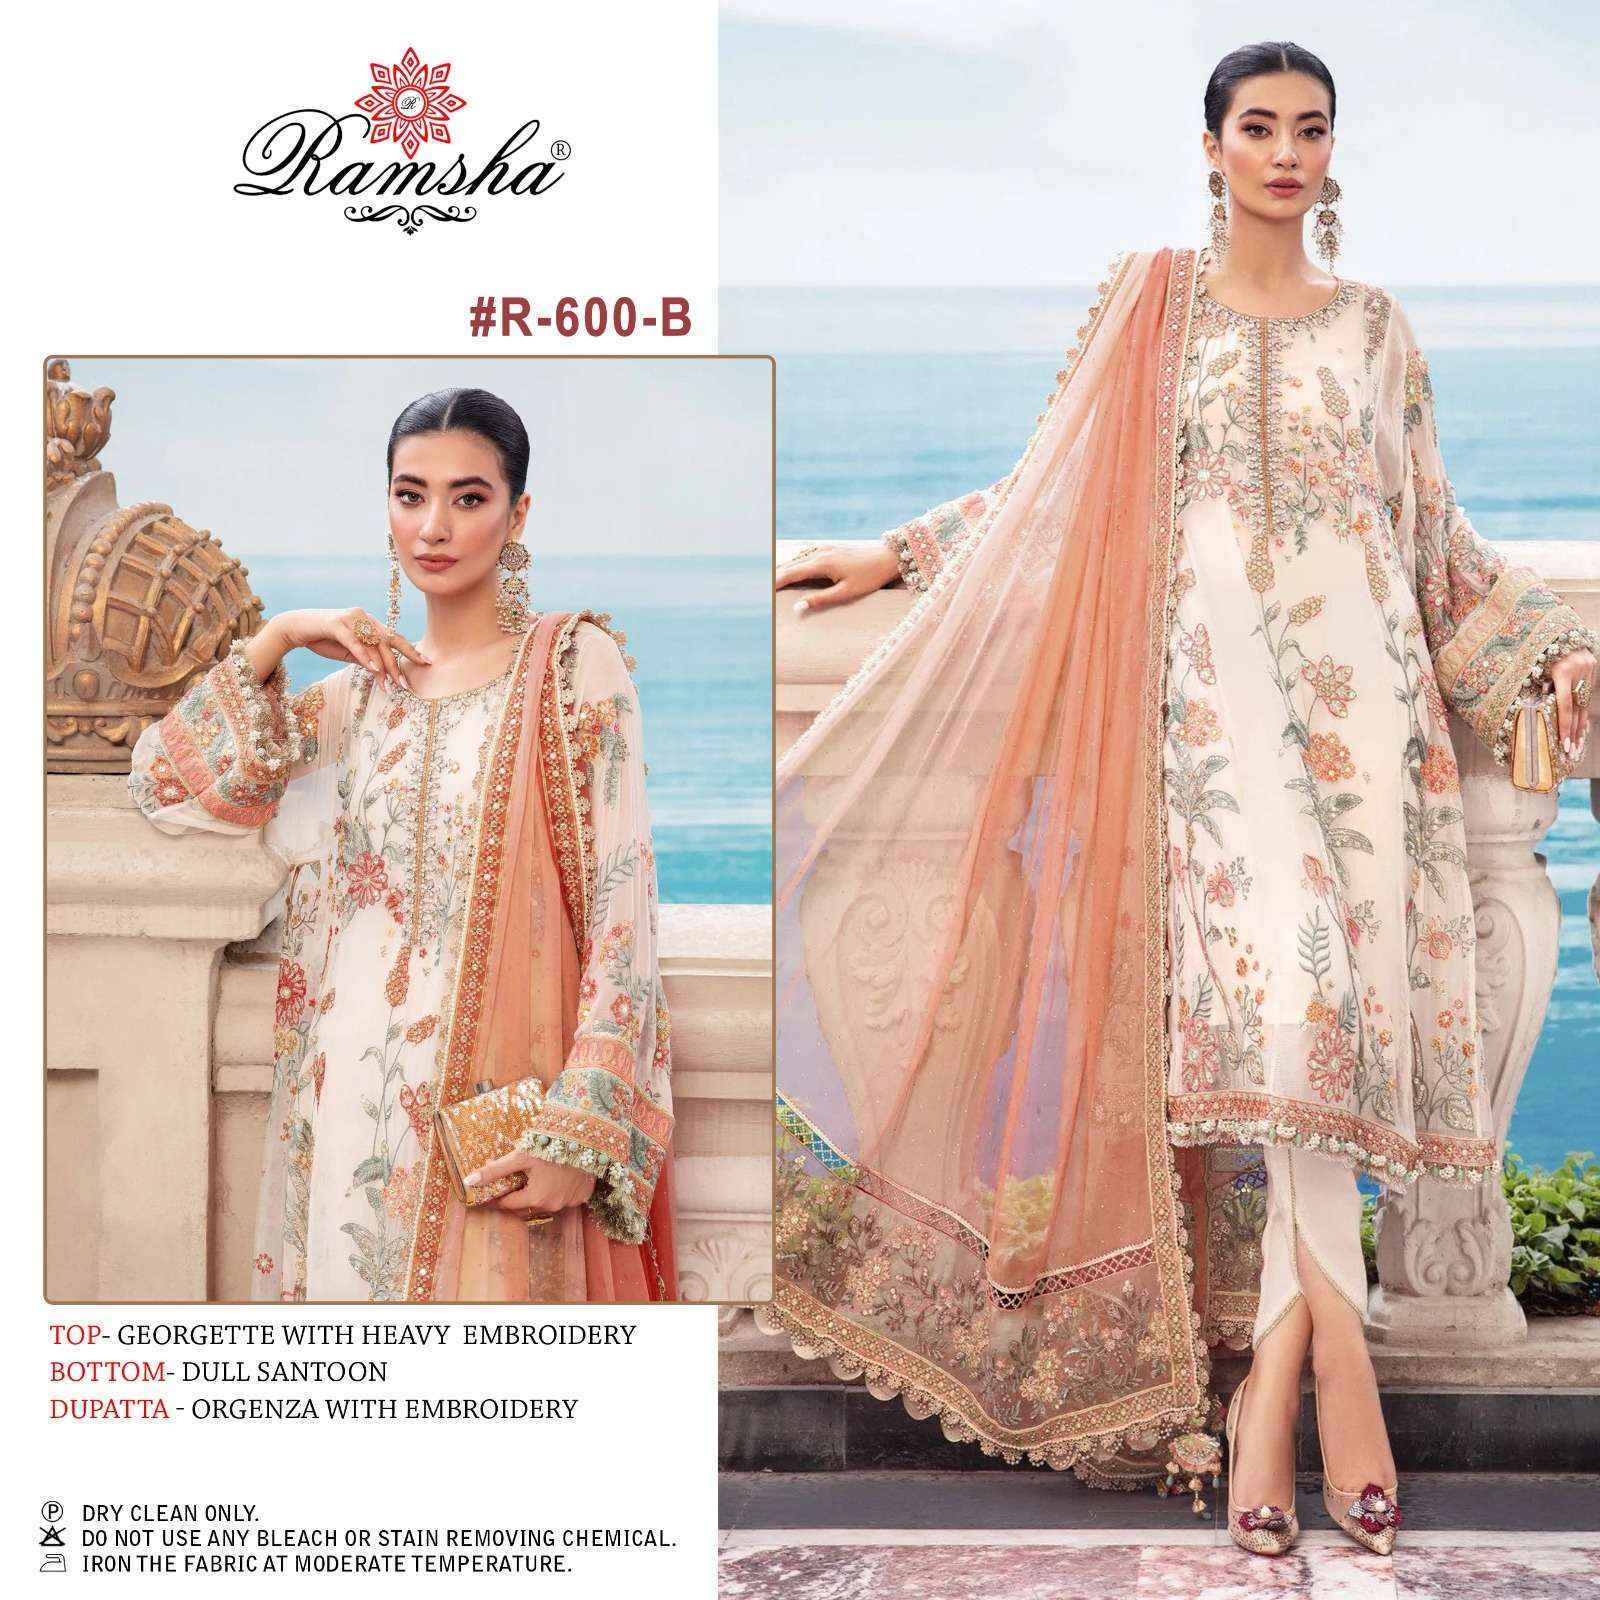 Ramsha R 600 Nx Georgette Dress Material 4 pcs Catalogue